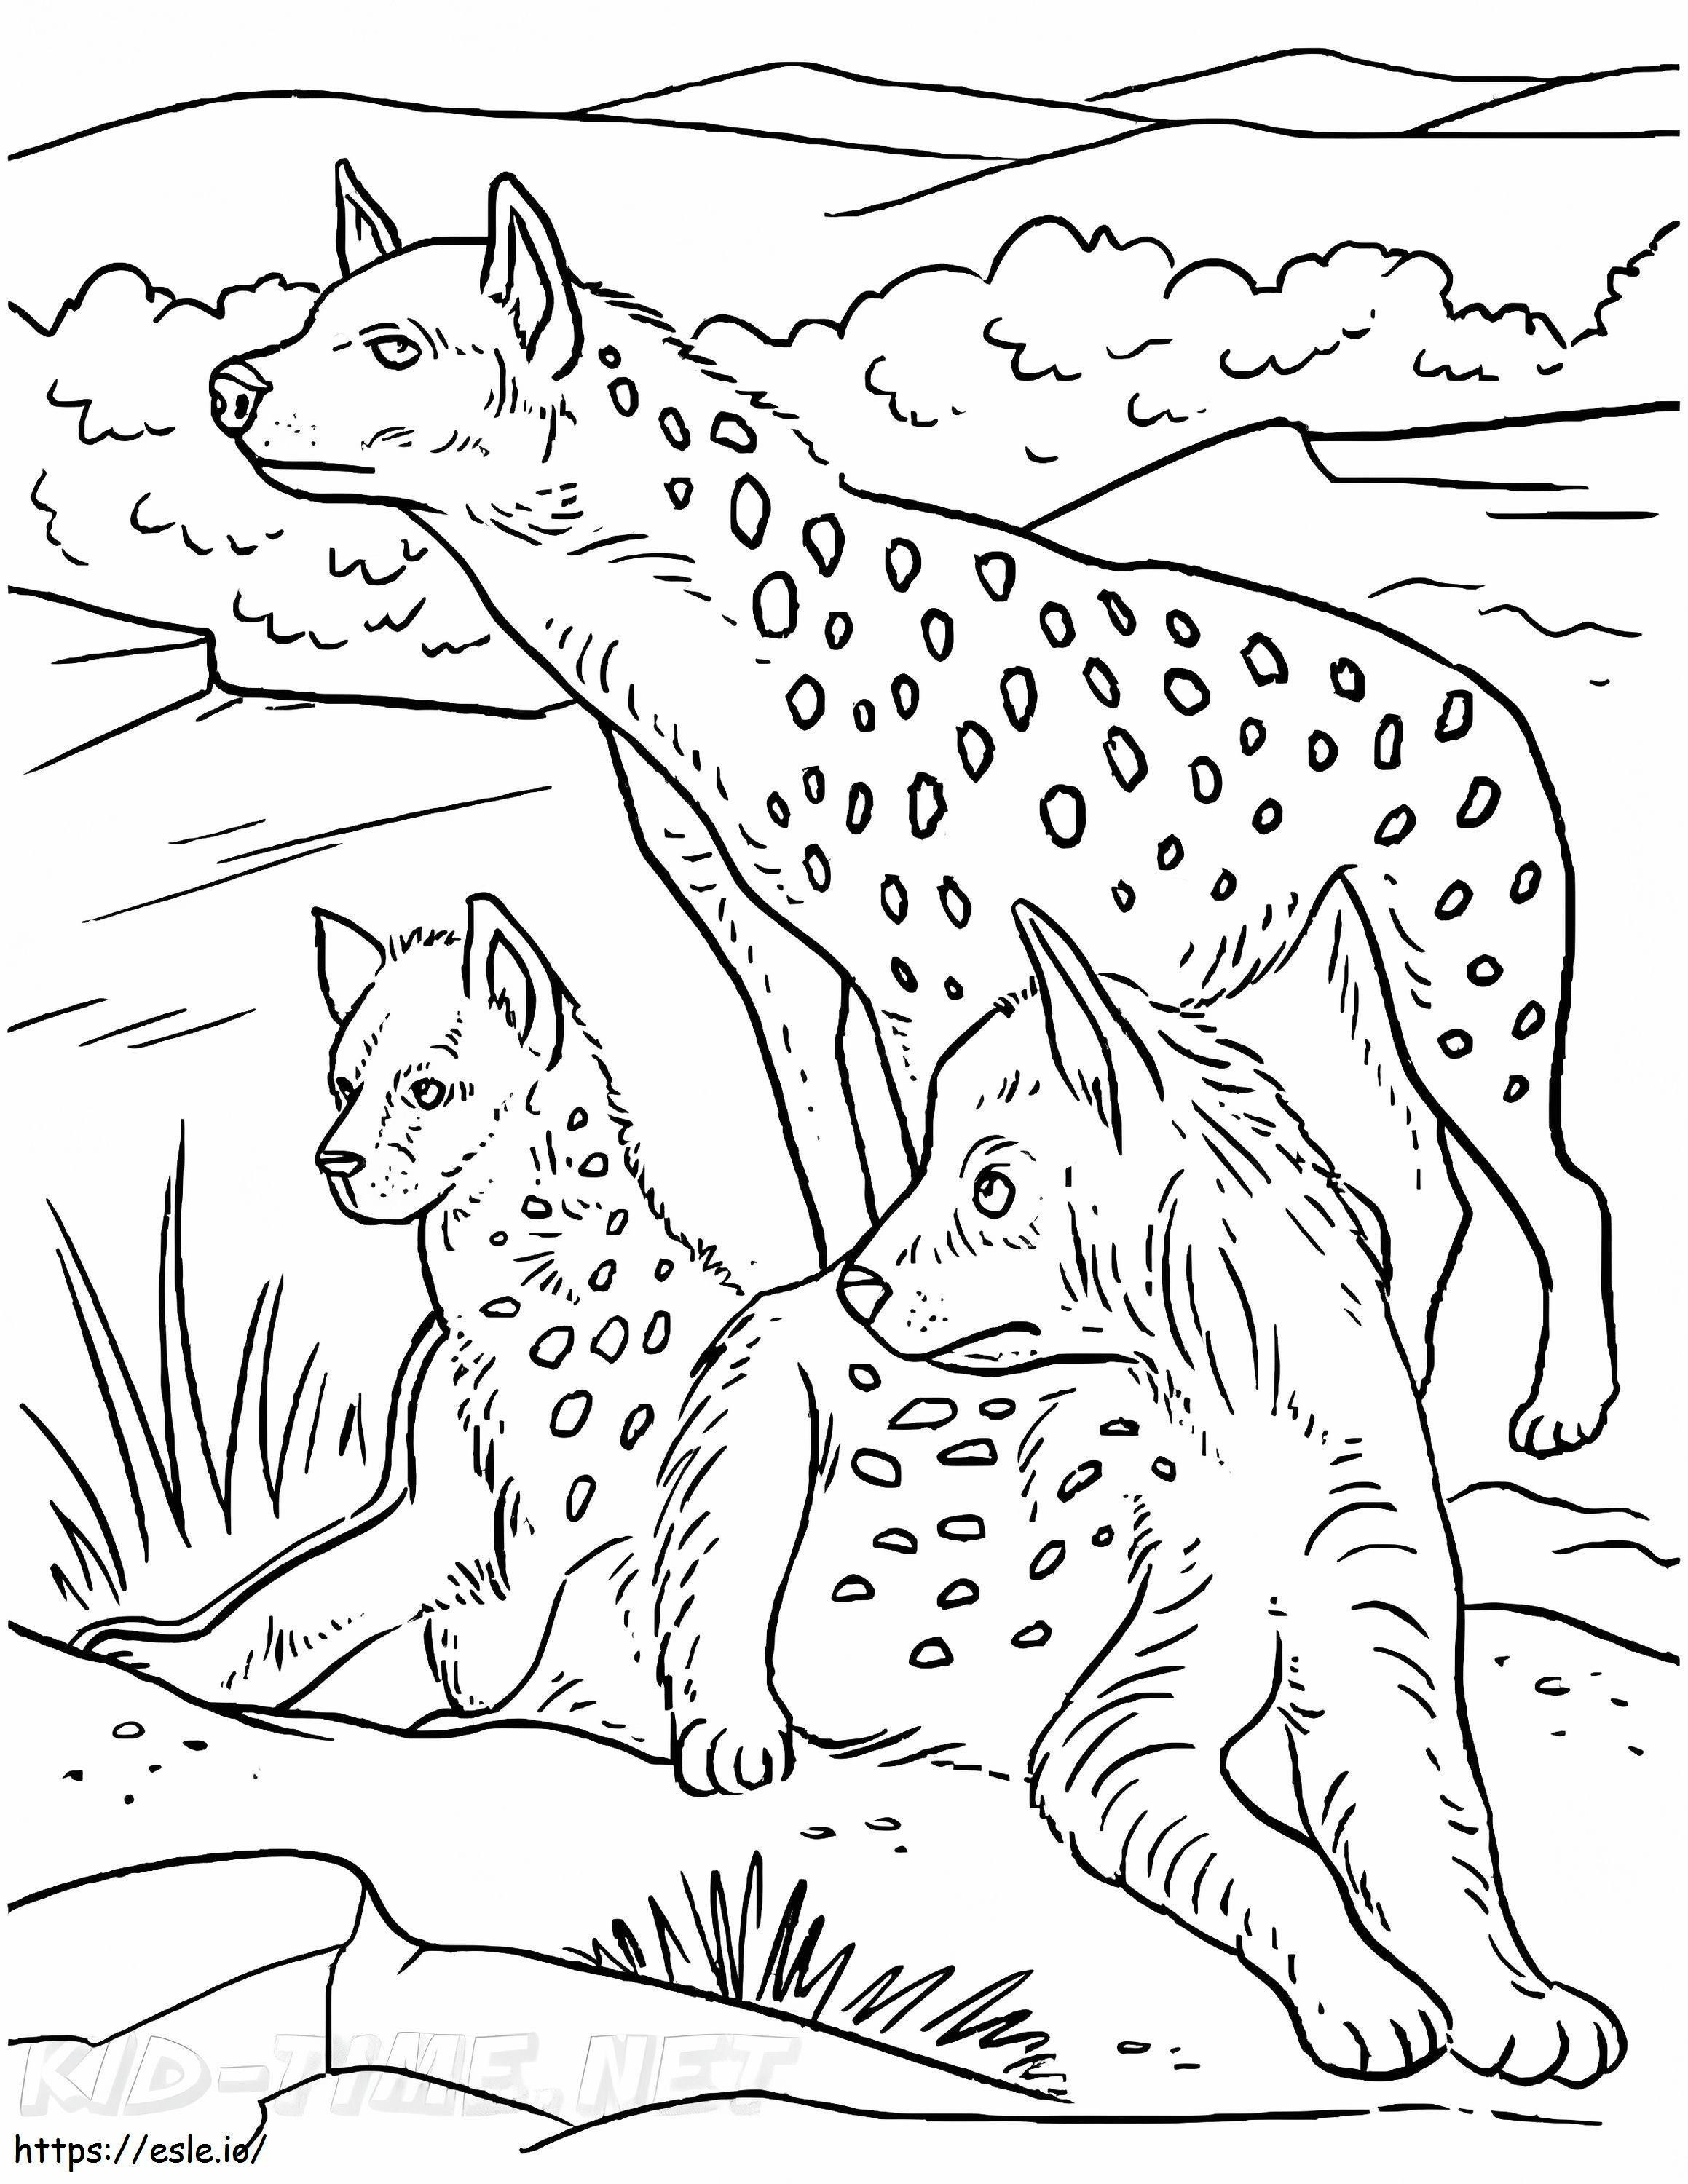 Drei Hyänen ausmalbilder